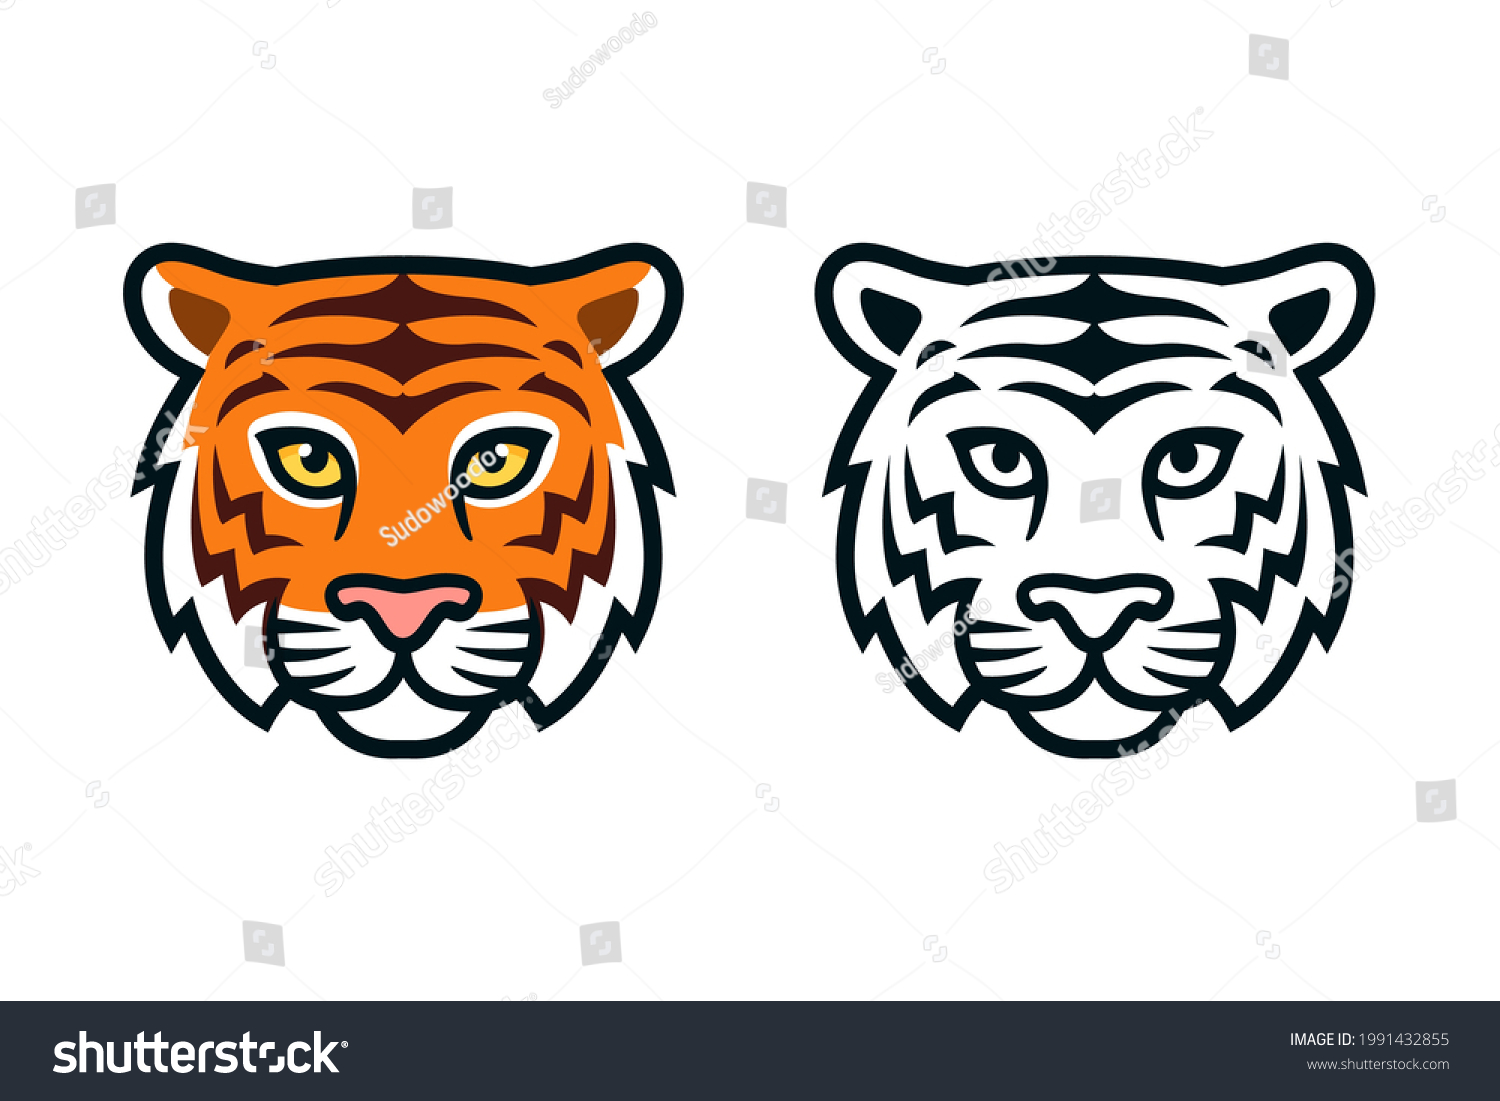 Эмблема тигра с олимпийскими кольцами на груди